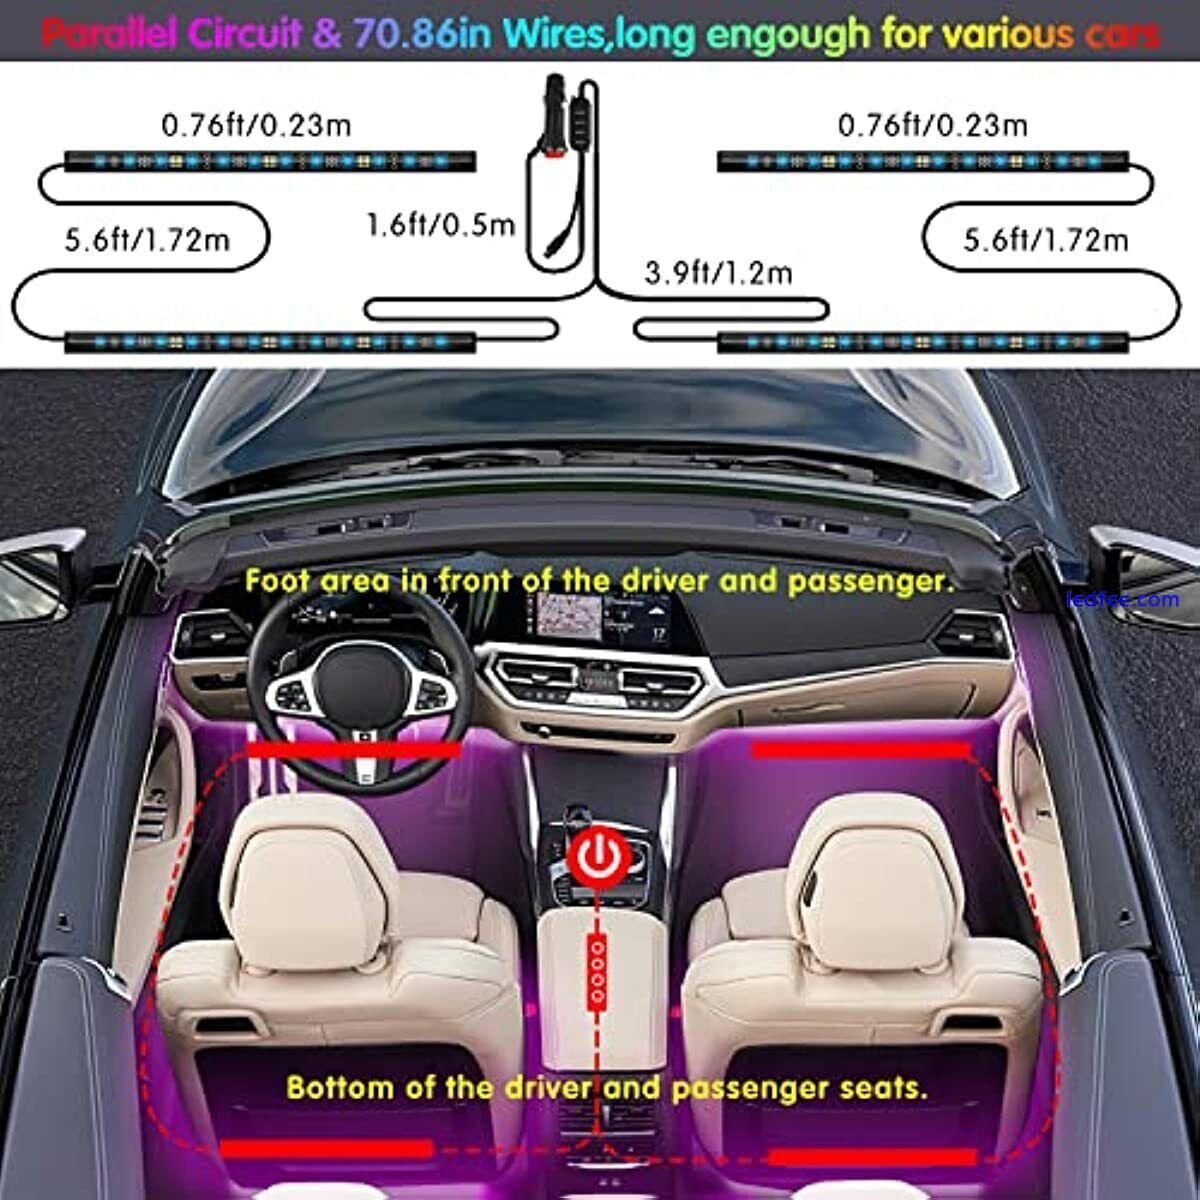 Interior Car Lights Keepsmile Car Accessories Car Led Lights APP Control with Re 5 